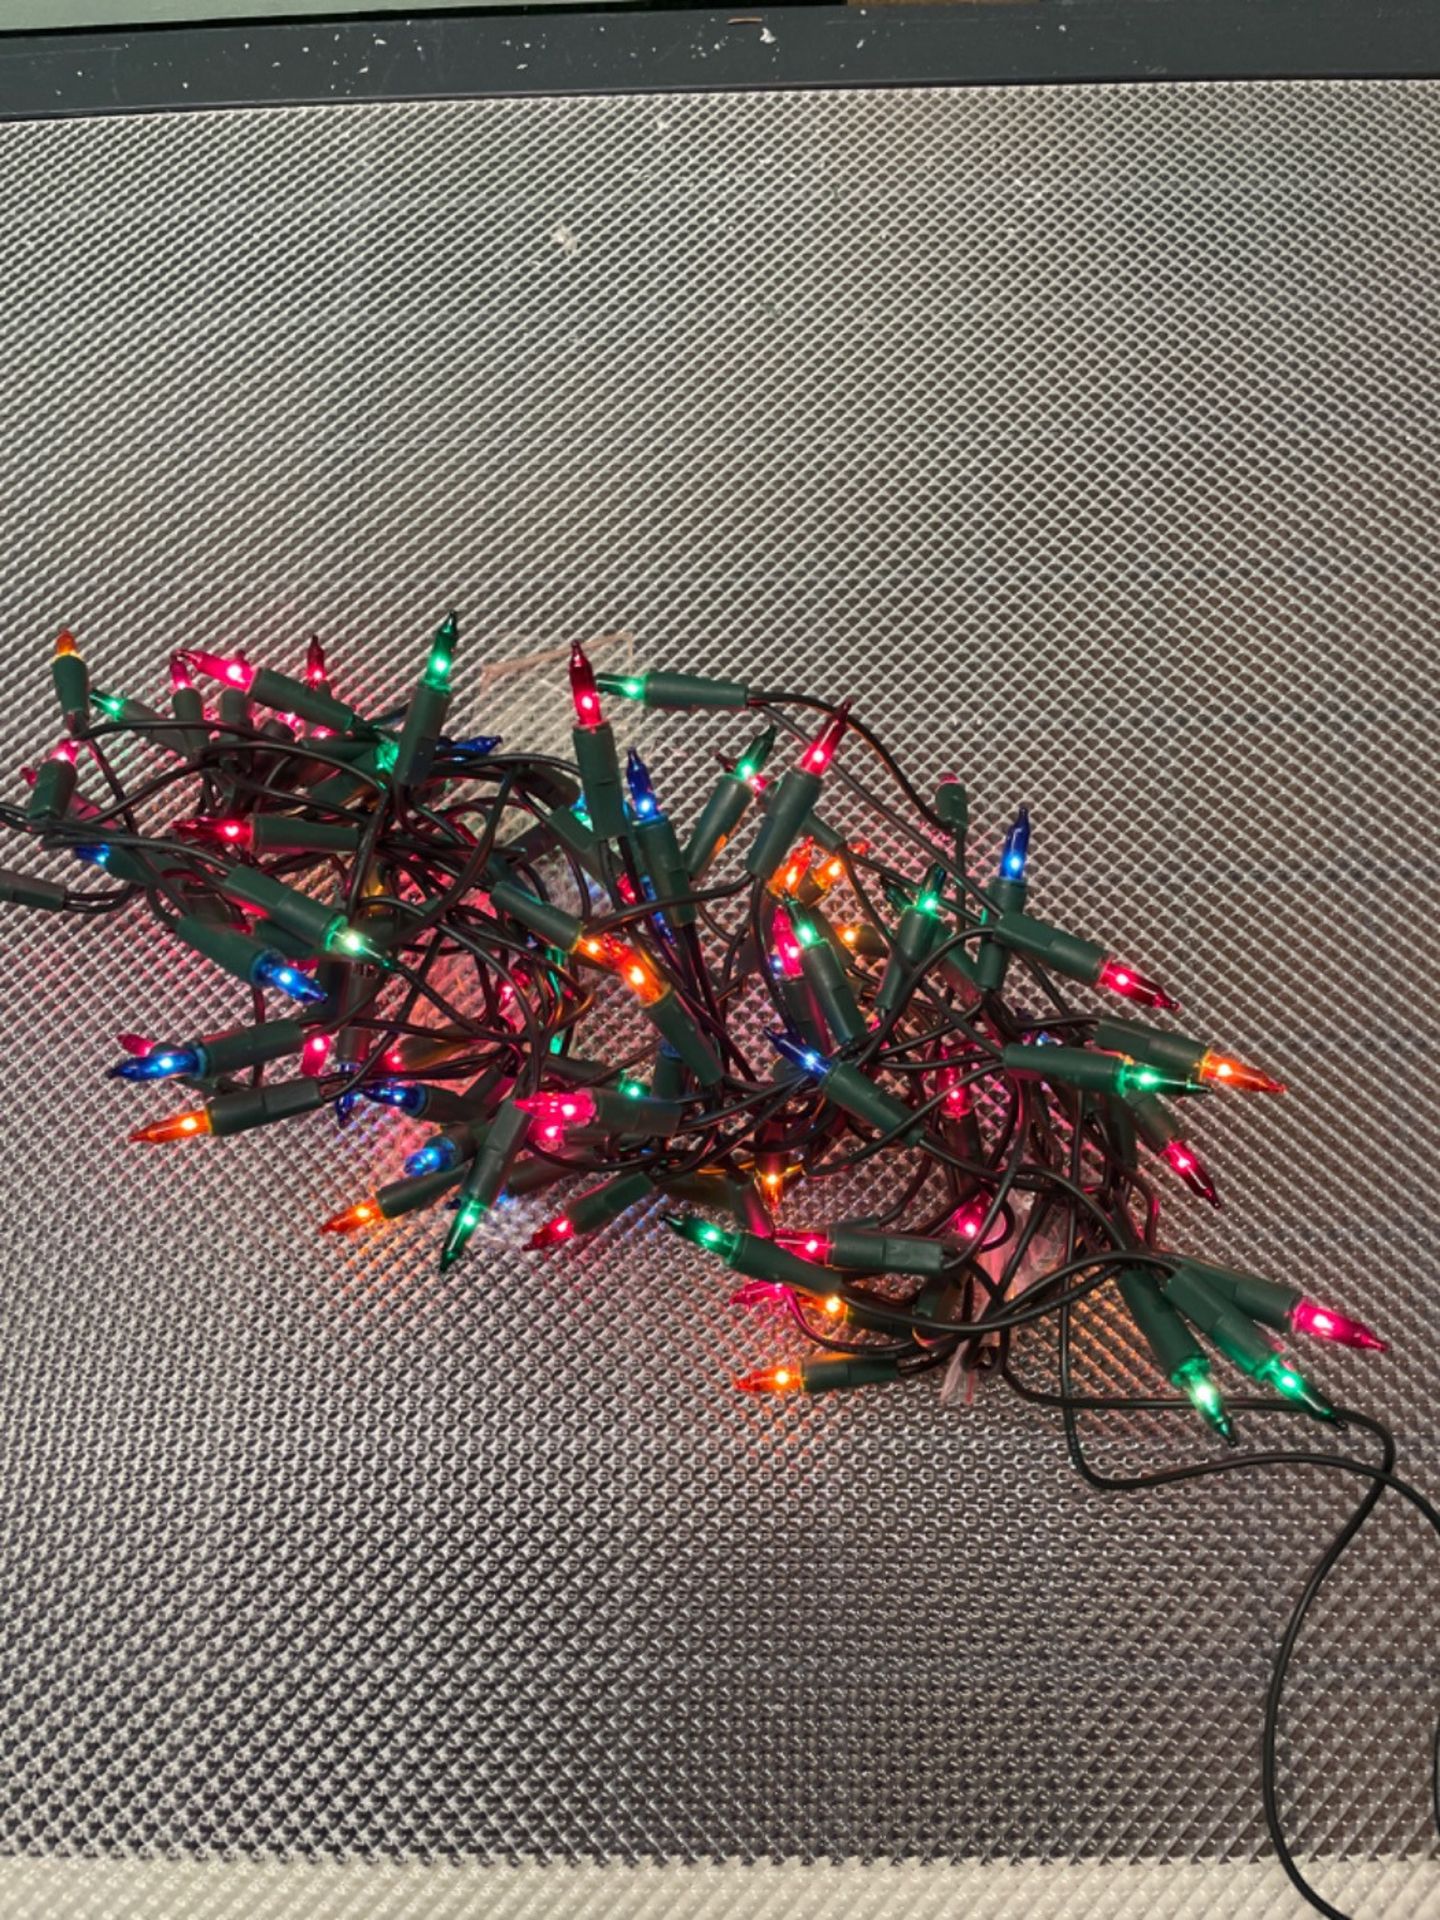 The Christmas Workshop 75230 100 Multi-Coloured Christmas Tree Lights / Static Shadeless Fairy Ligh - Image 2 of 3